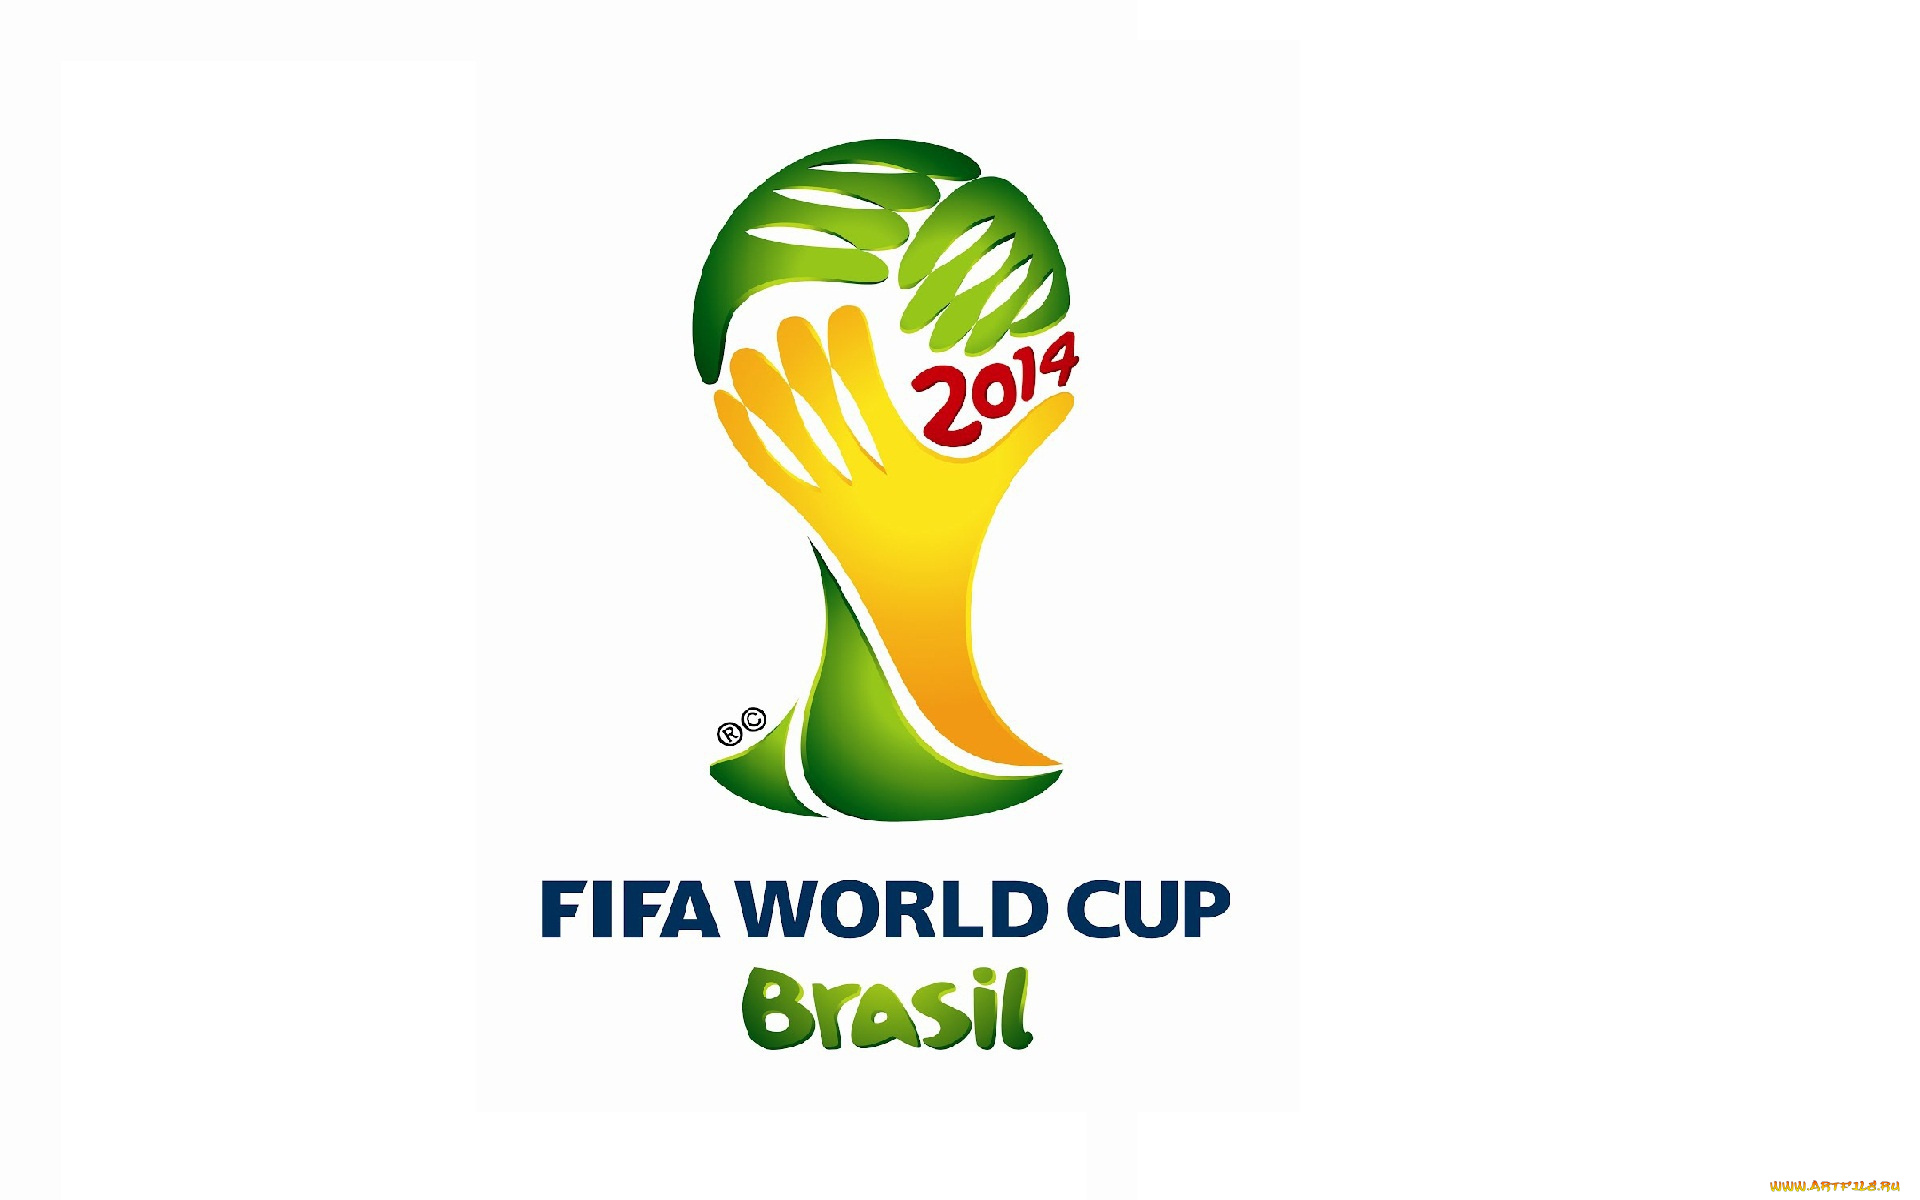 спорт, логотипы, турниров, чемпионат, бразилия, футбол, руки, надпись, эмблема, логотип